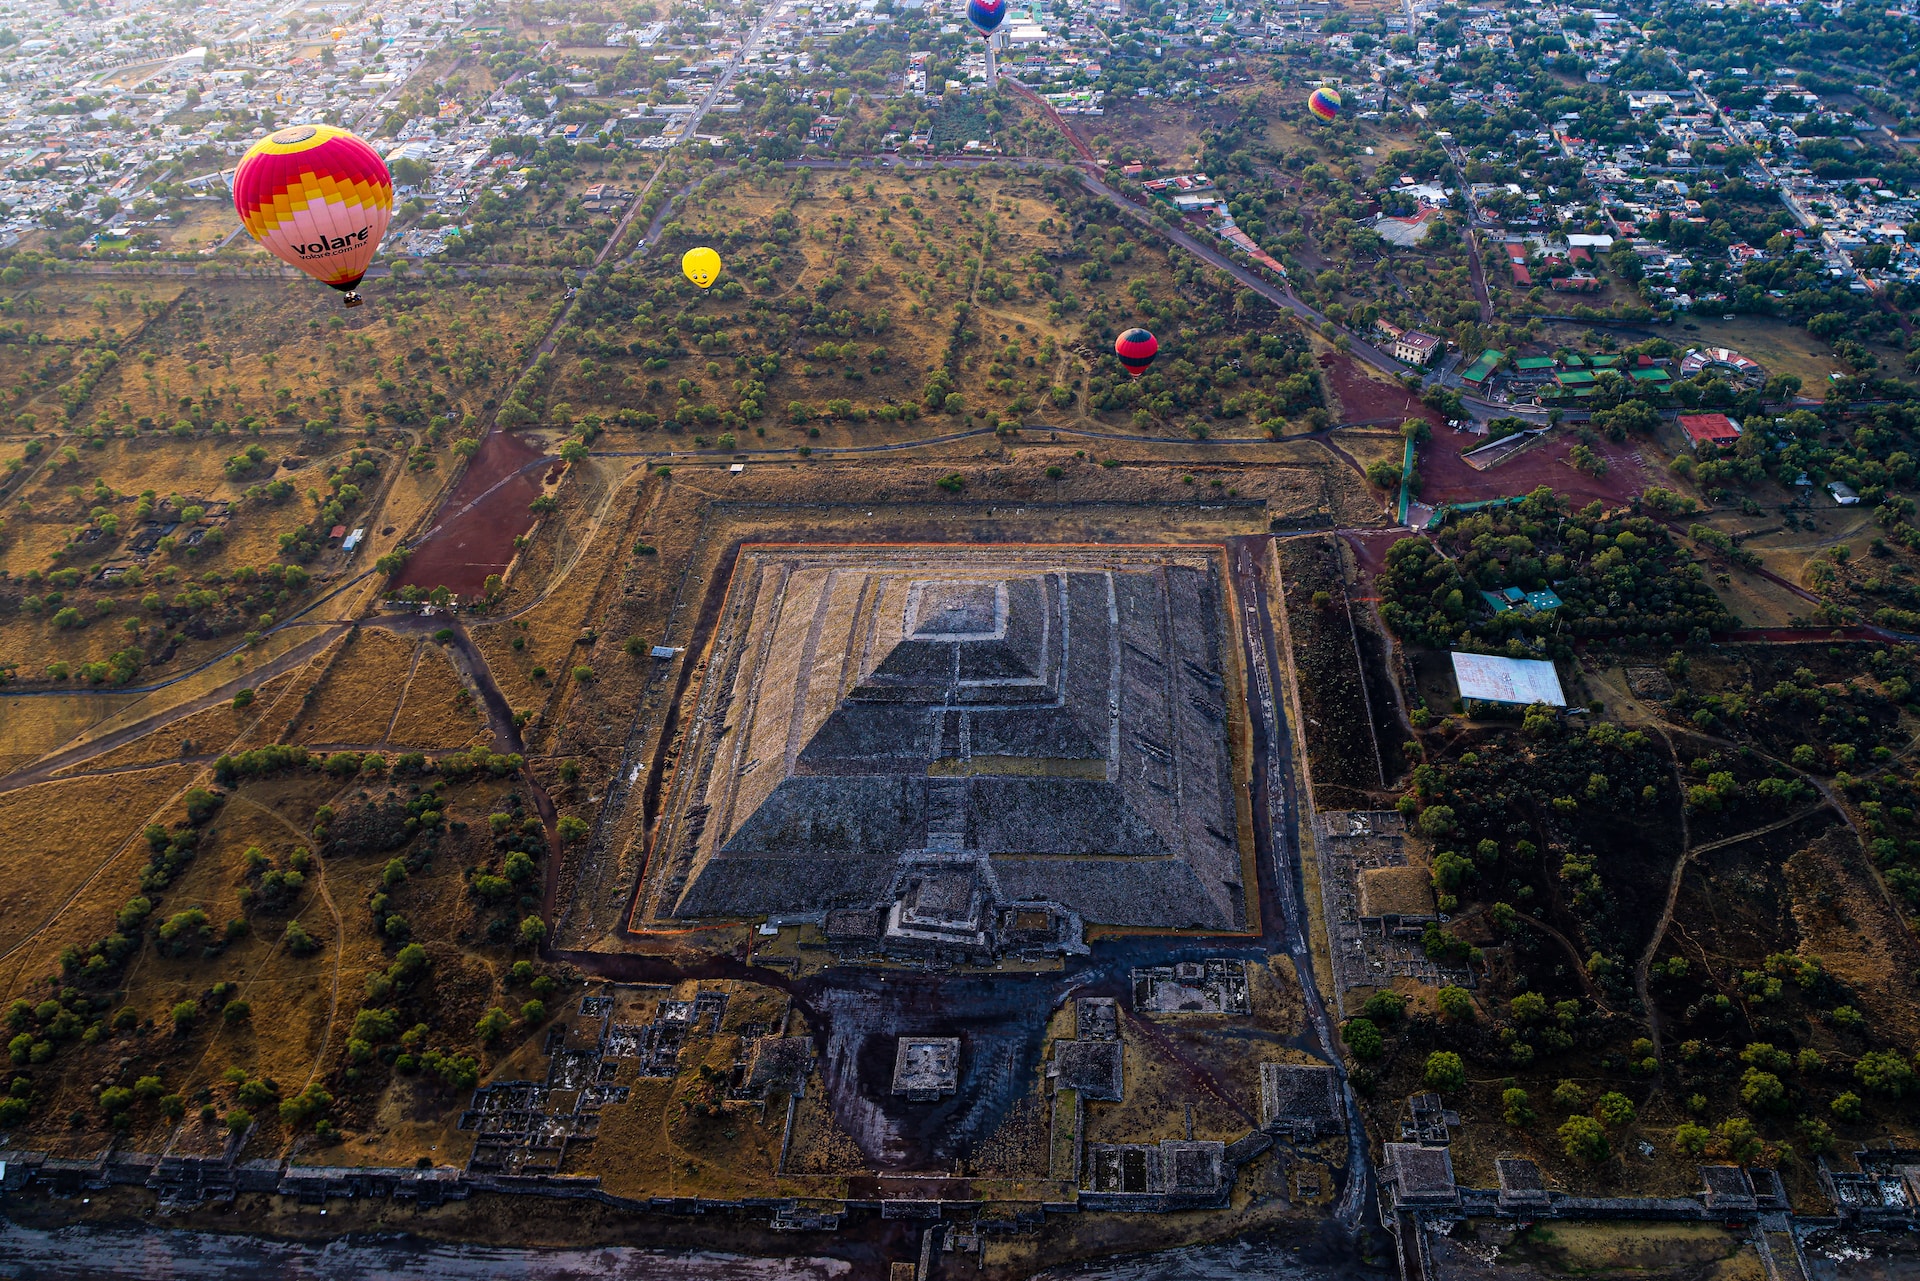 Teotihucan from a hot air ballon

